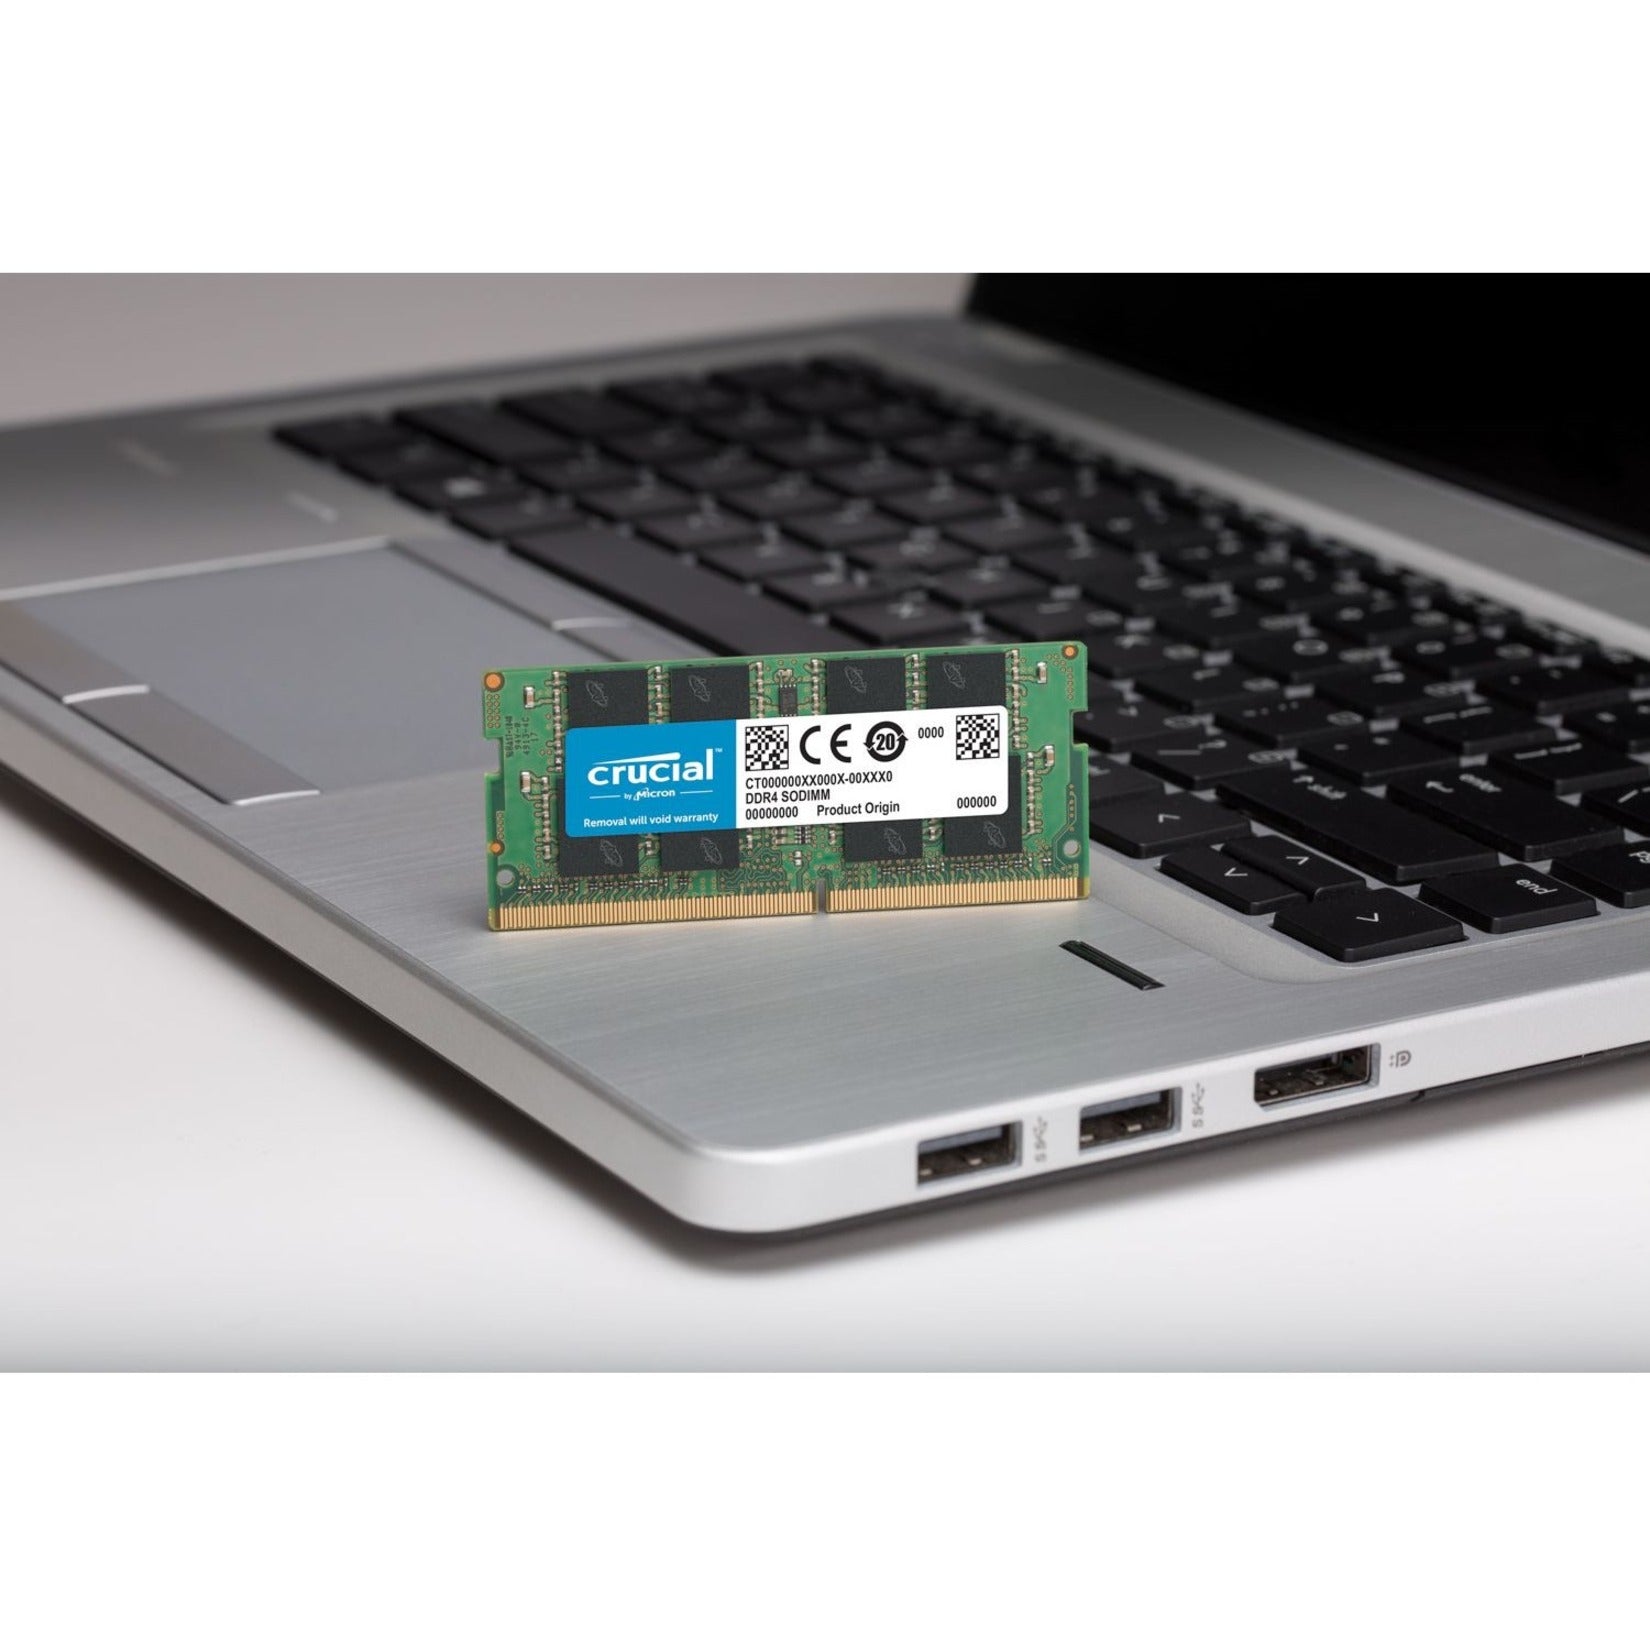 Crucial CT2K32G4SFD8266 64GB (2 x 32GB) DDR4 SDRAM Memory Kit, High Performance RAM for Notebooks